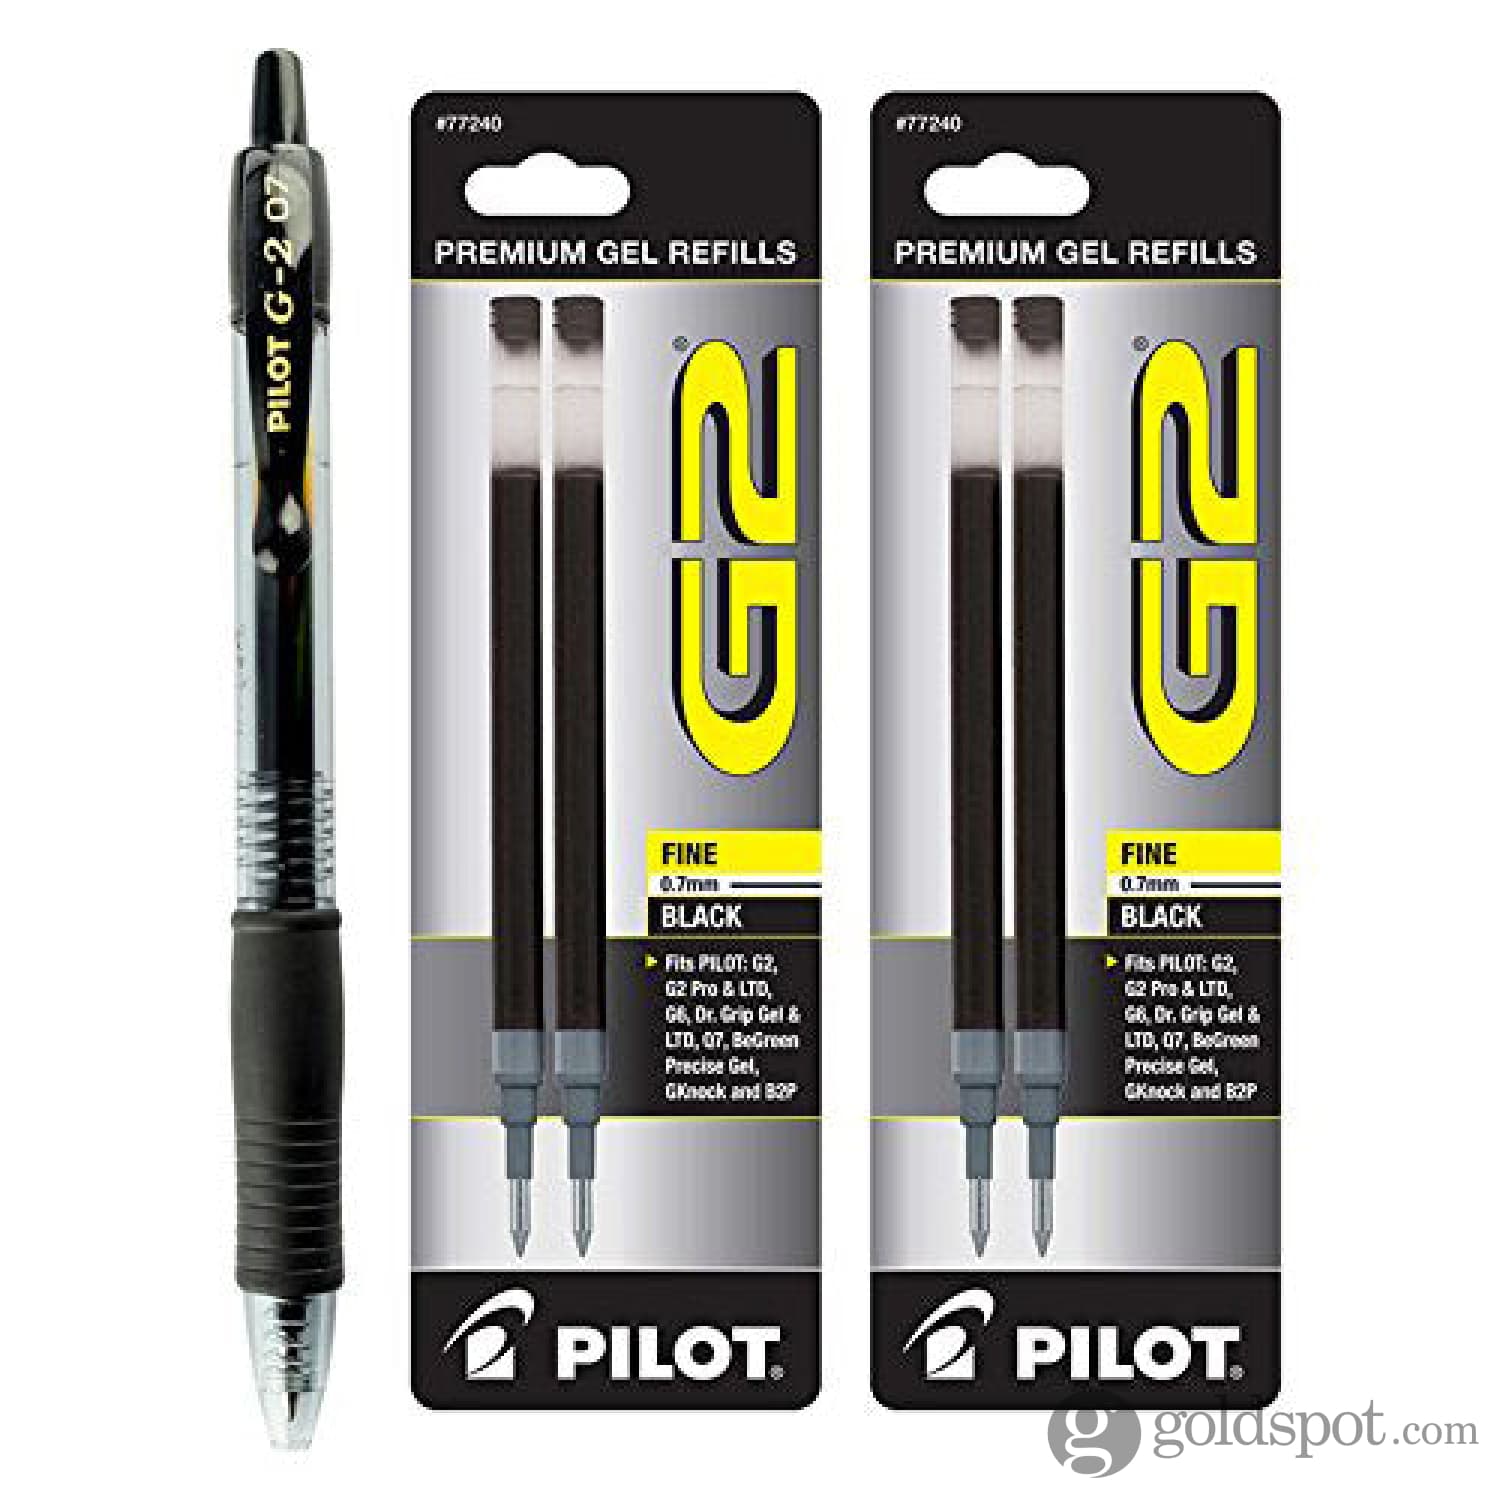 Pilot G2 Gel Pen - 0.5 mm - Black